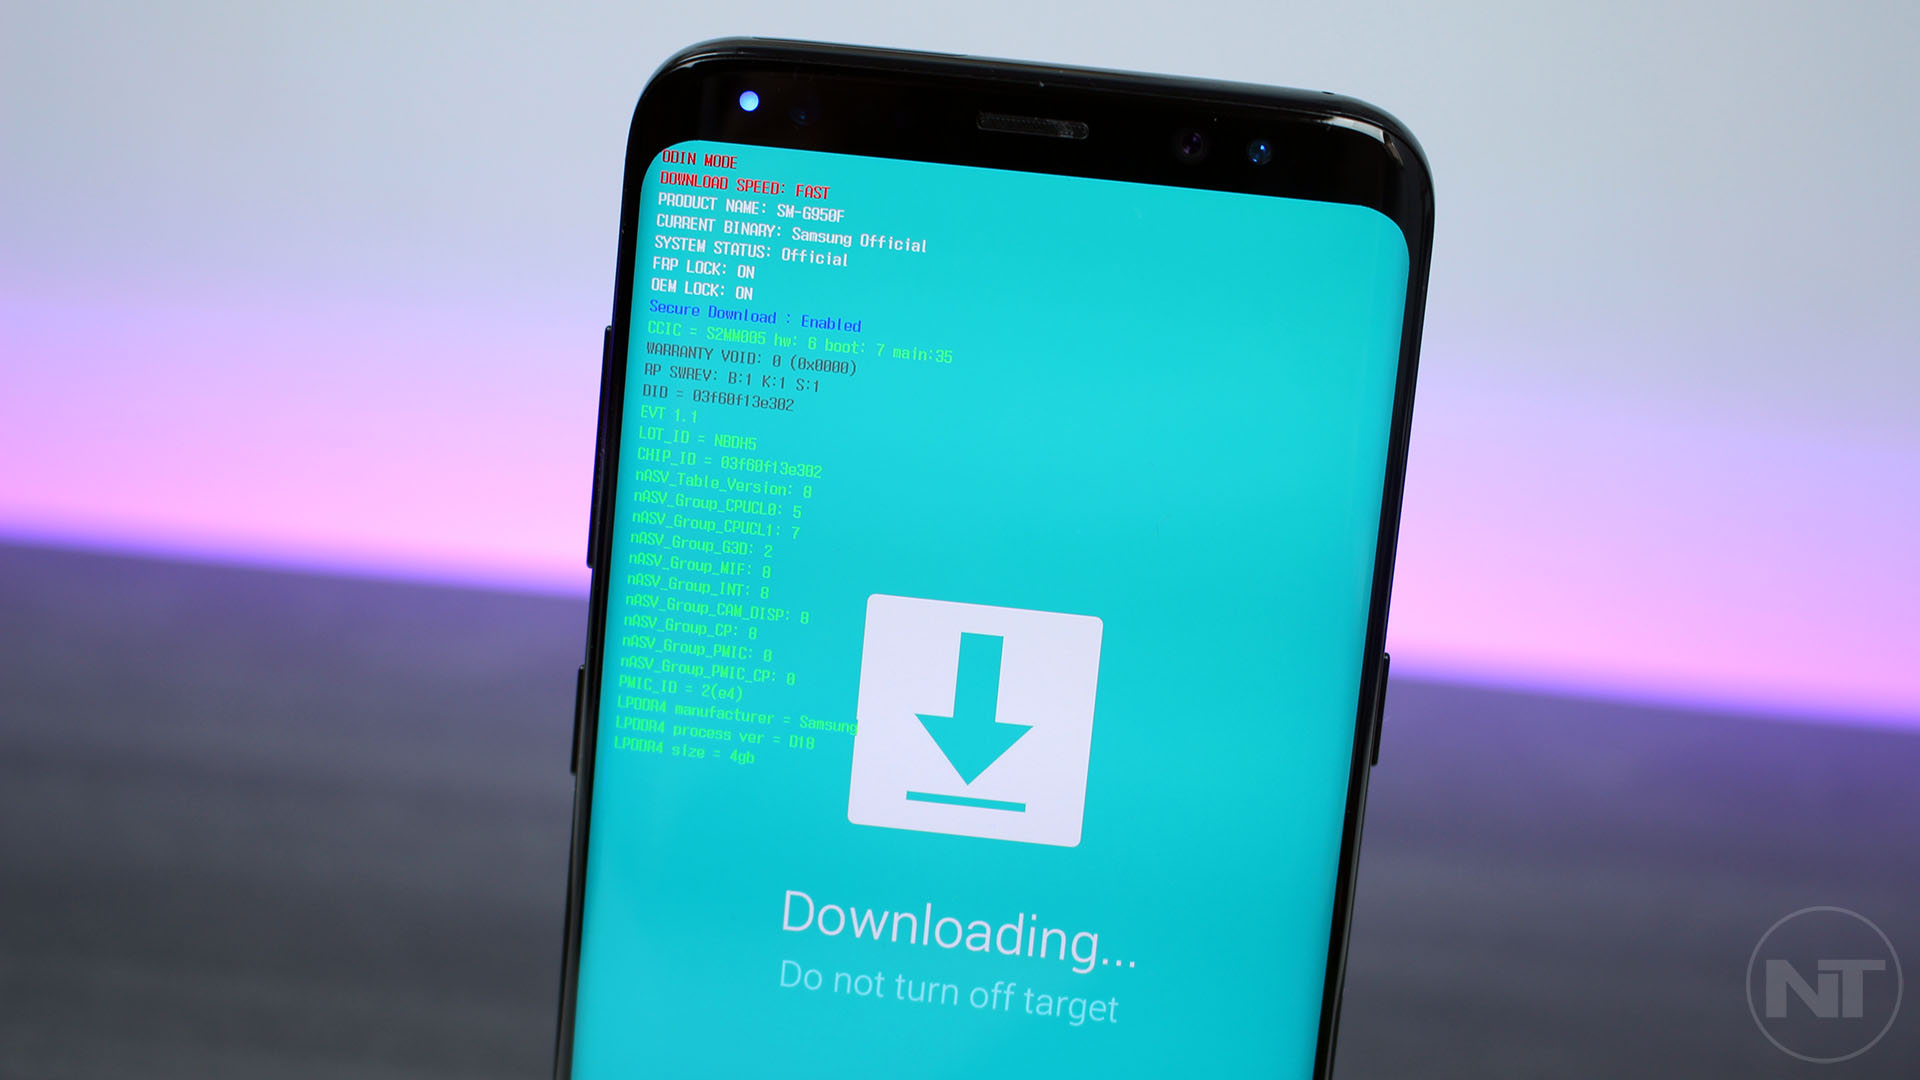 Samsung A12 Download Mode